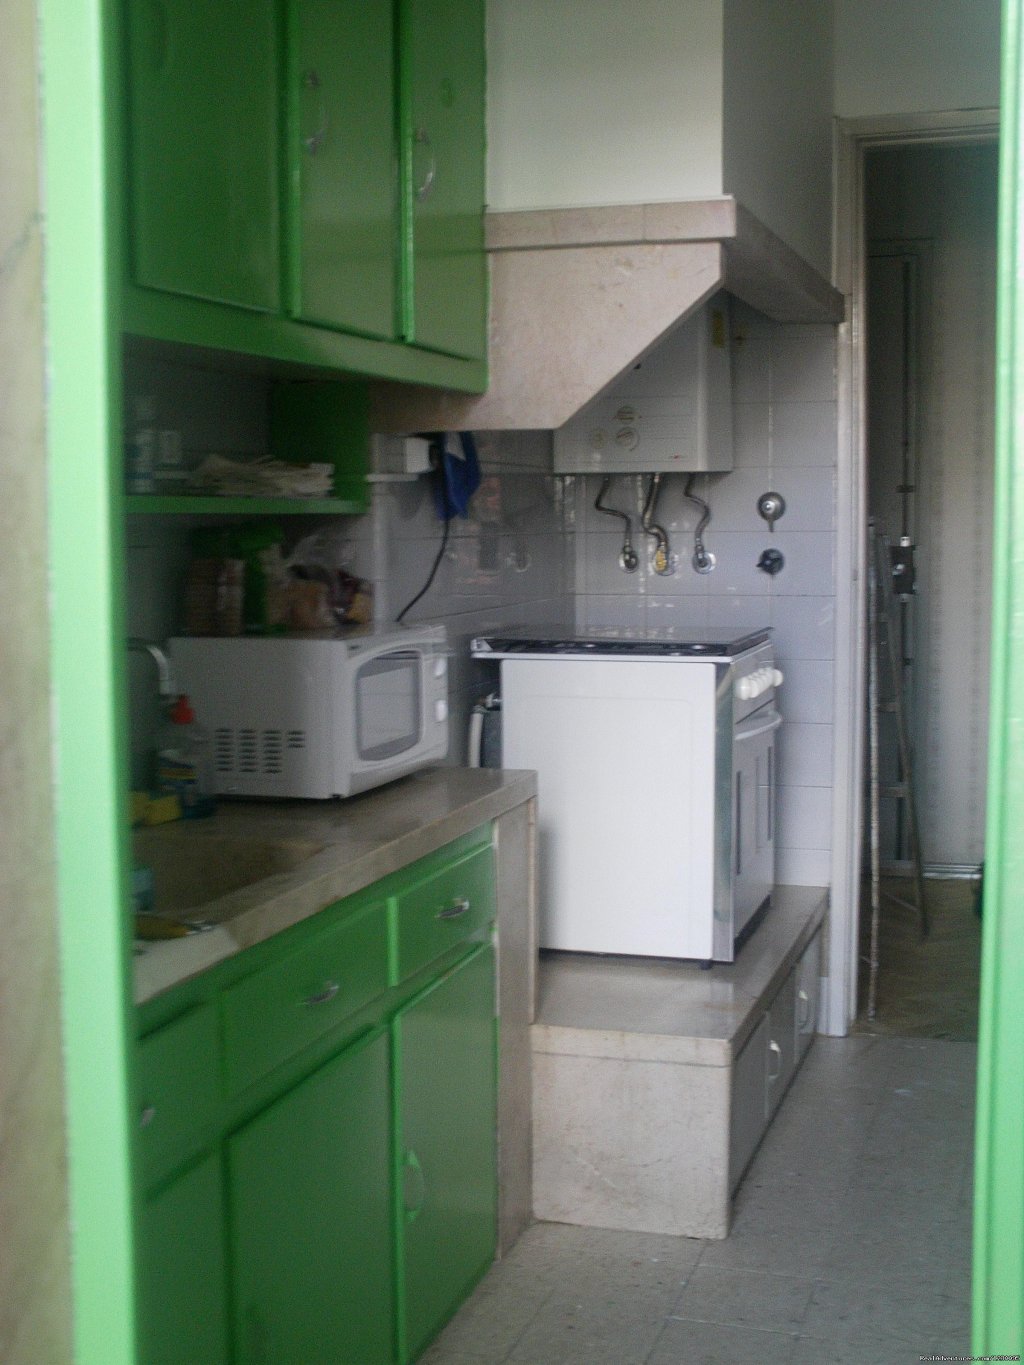 kitchen 2 - Arroios | Rent a Room in Central Lisbon | Image #3/16 | 